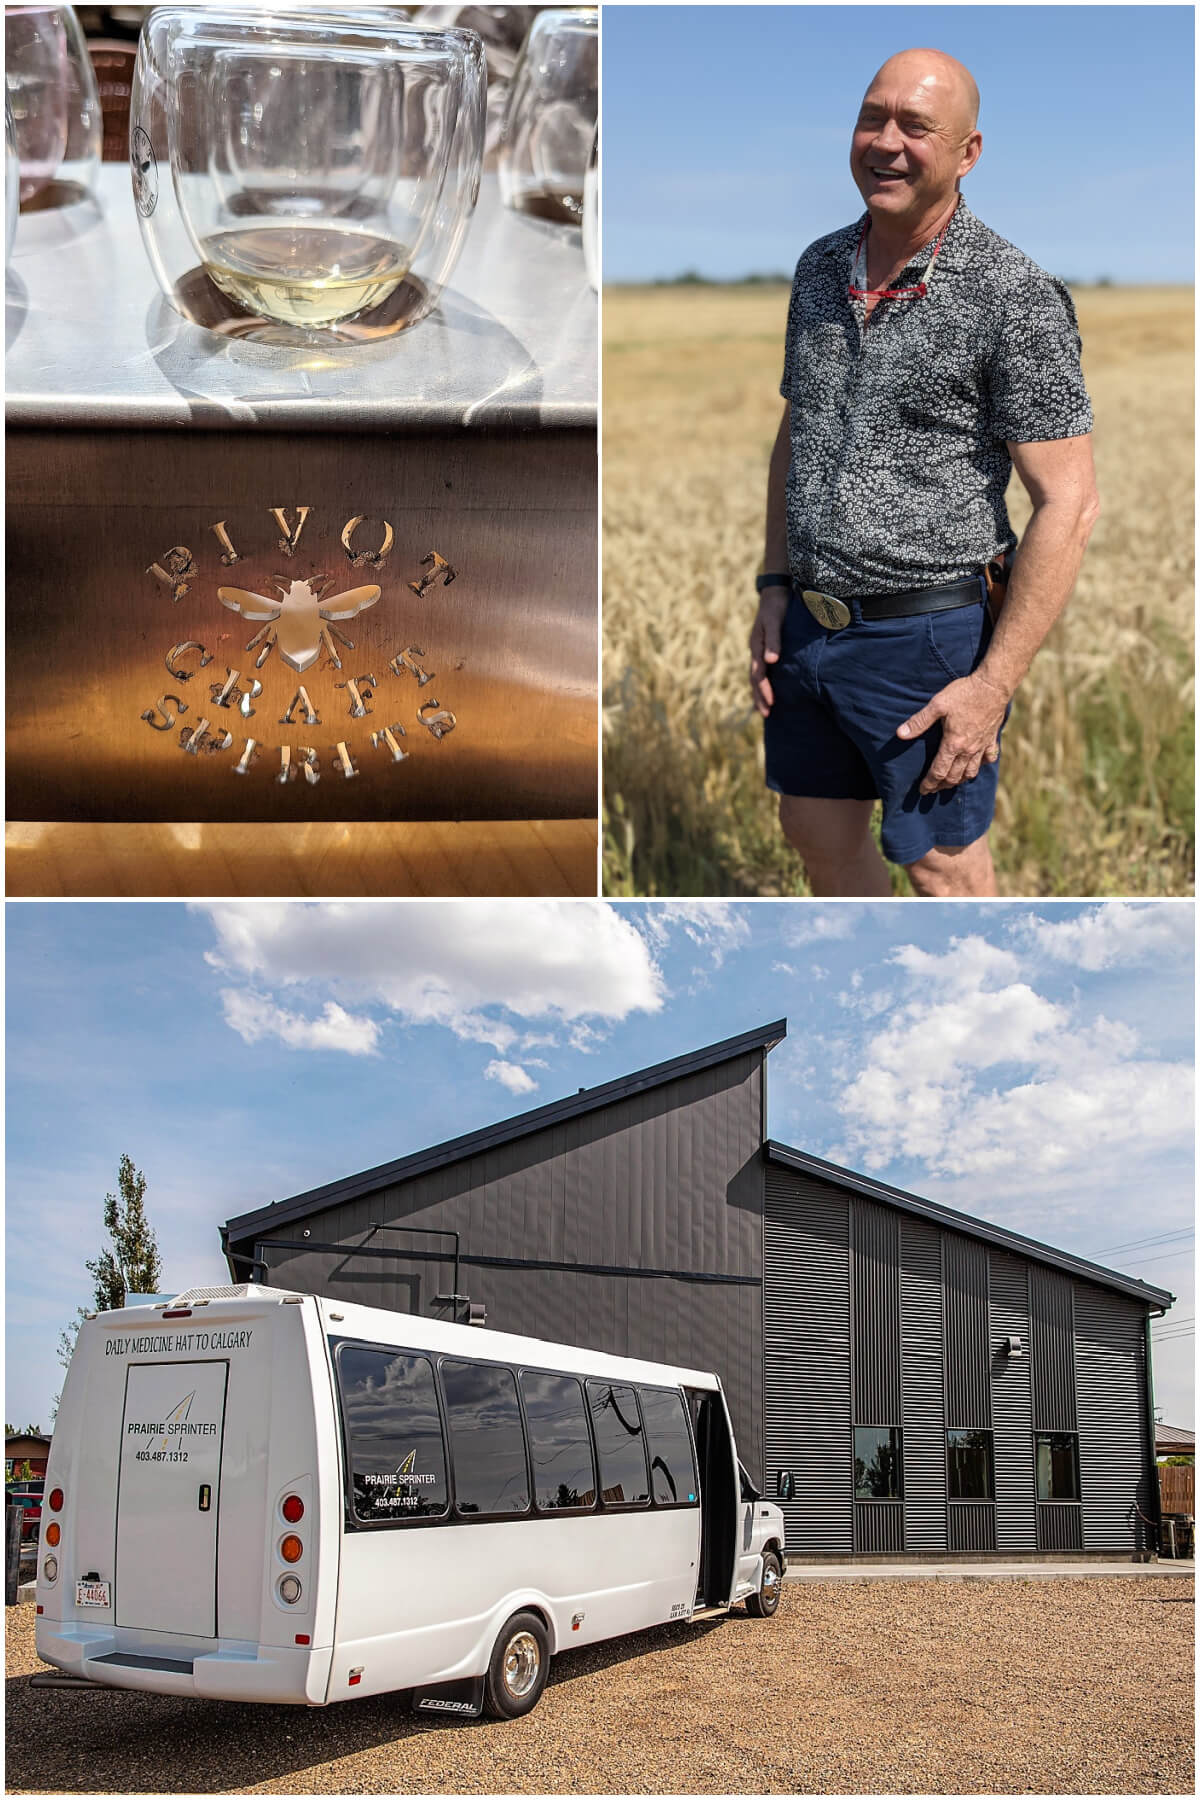 Scenes from the Prairie Sprinter tour; a flight of spirits at Pivot Spirits Craft Distillery in Rolling Hills, Alberta.